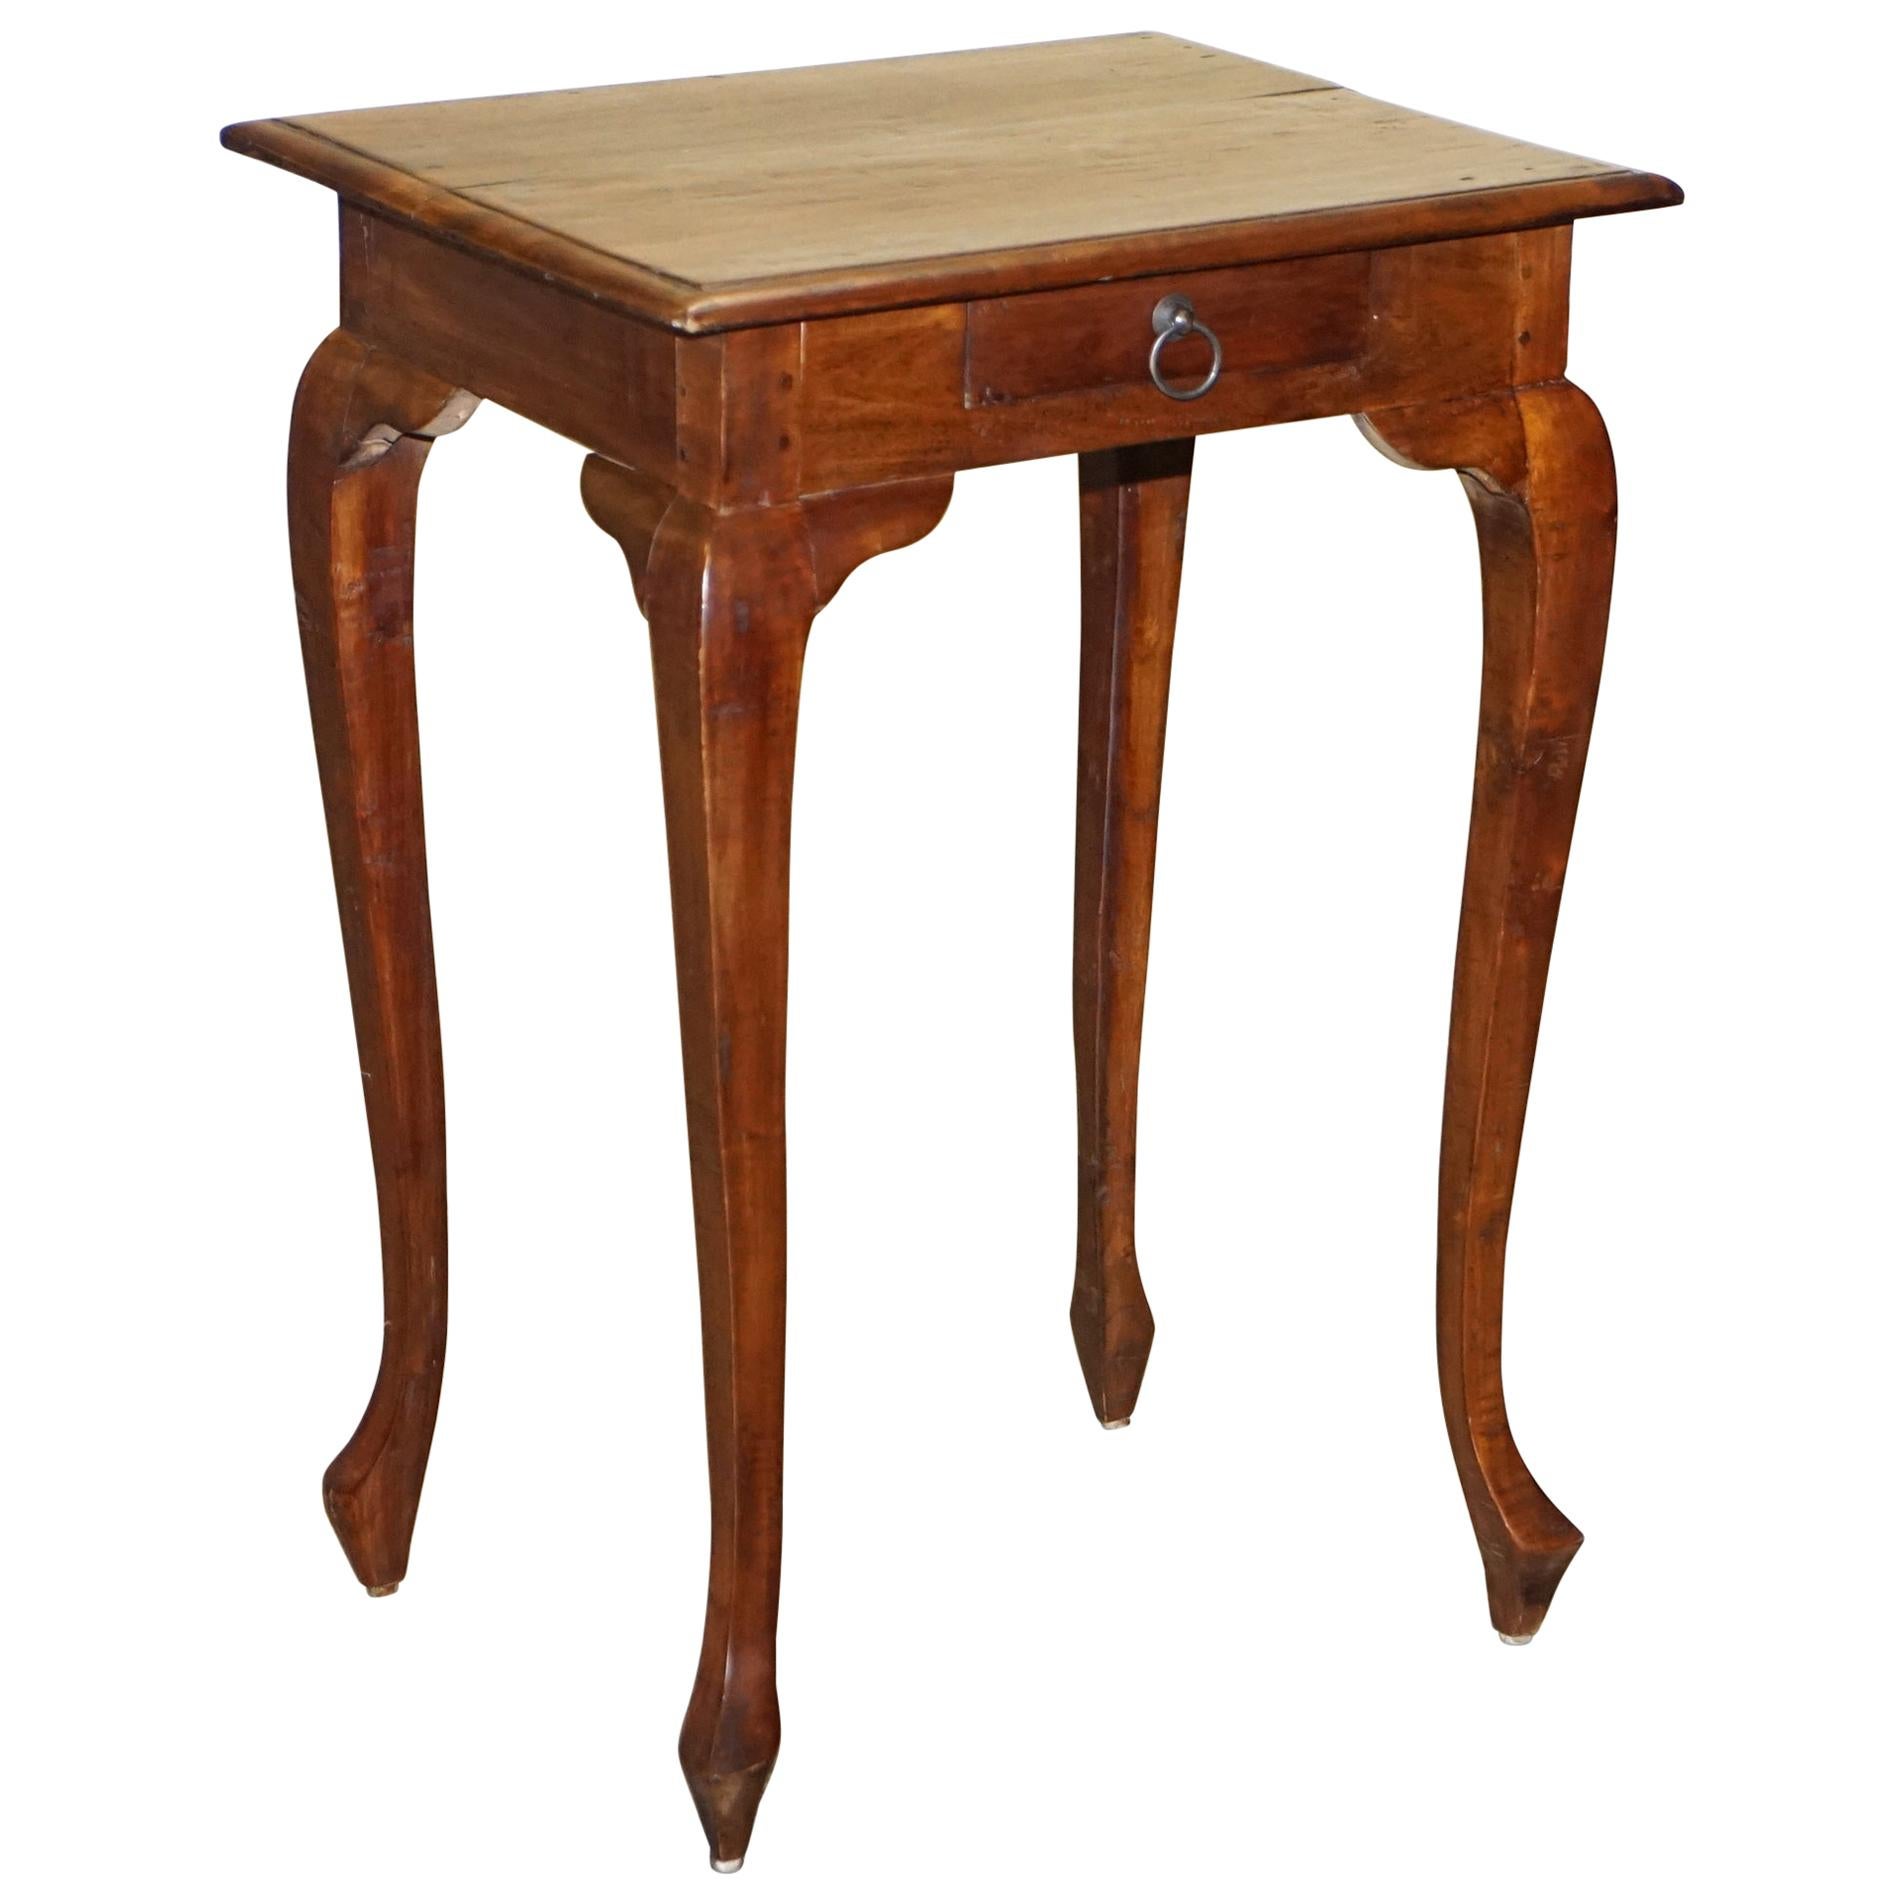 Vintage Hardwood Single Drawer Side Table Made Using Traditional Dowels